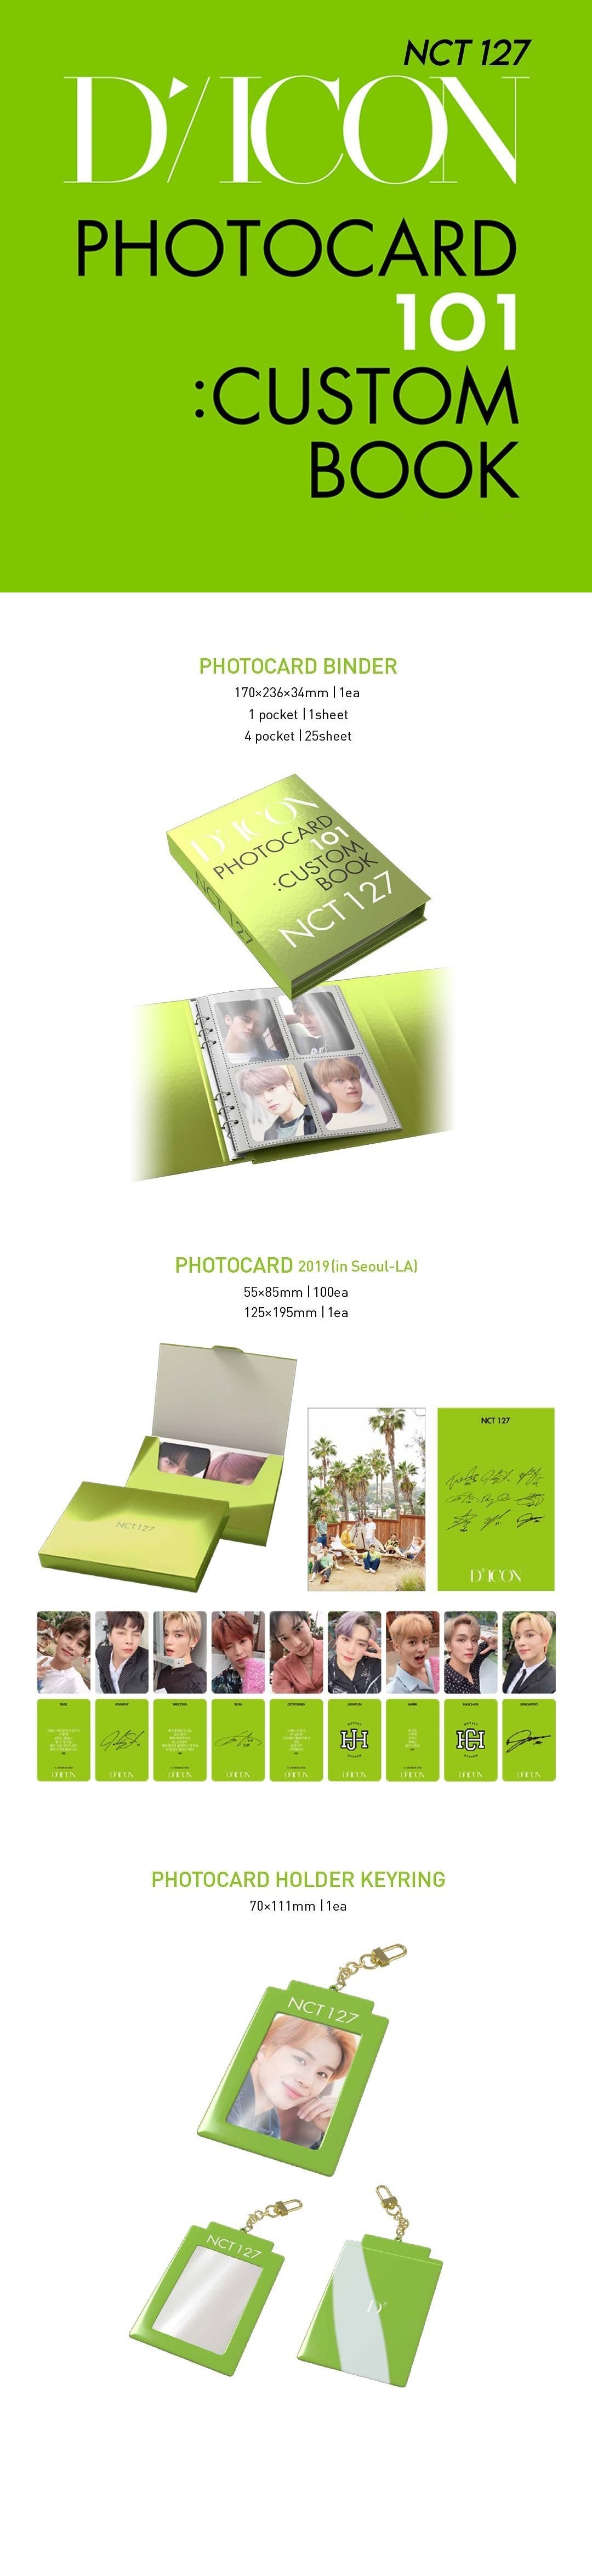 NCT 127 - Dicon Photocard 101: Libro personalizado